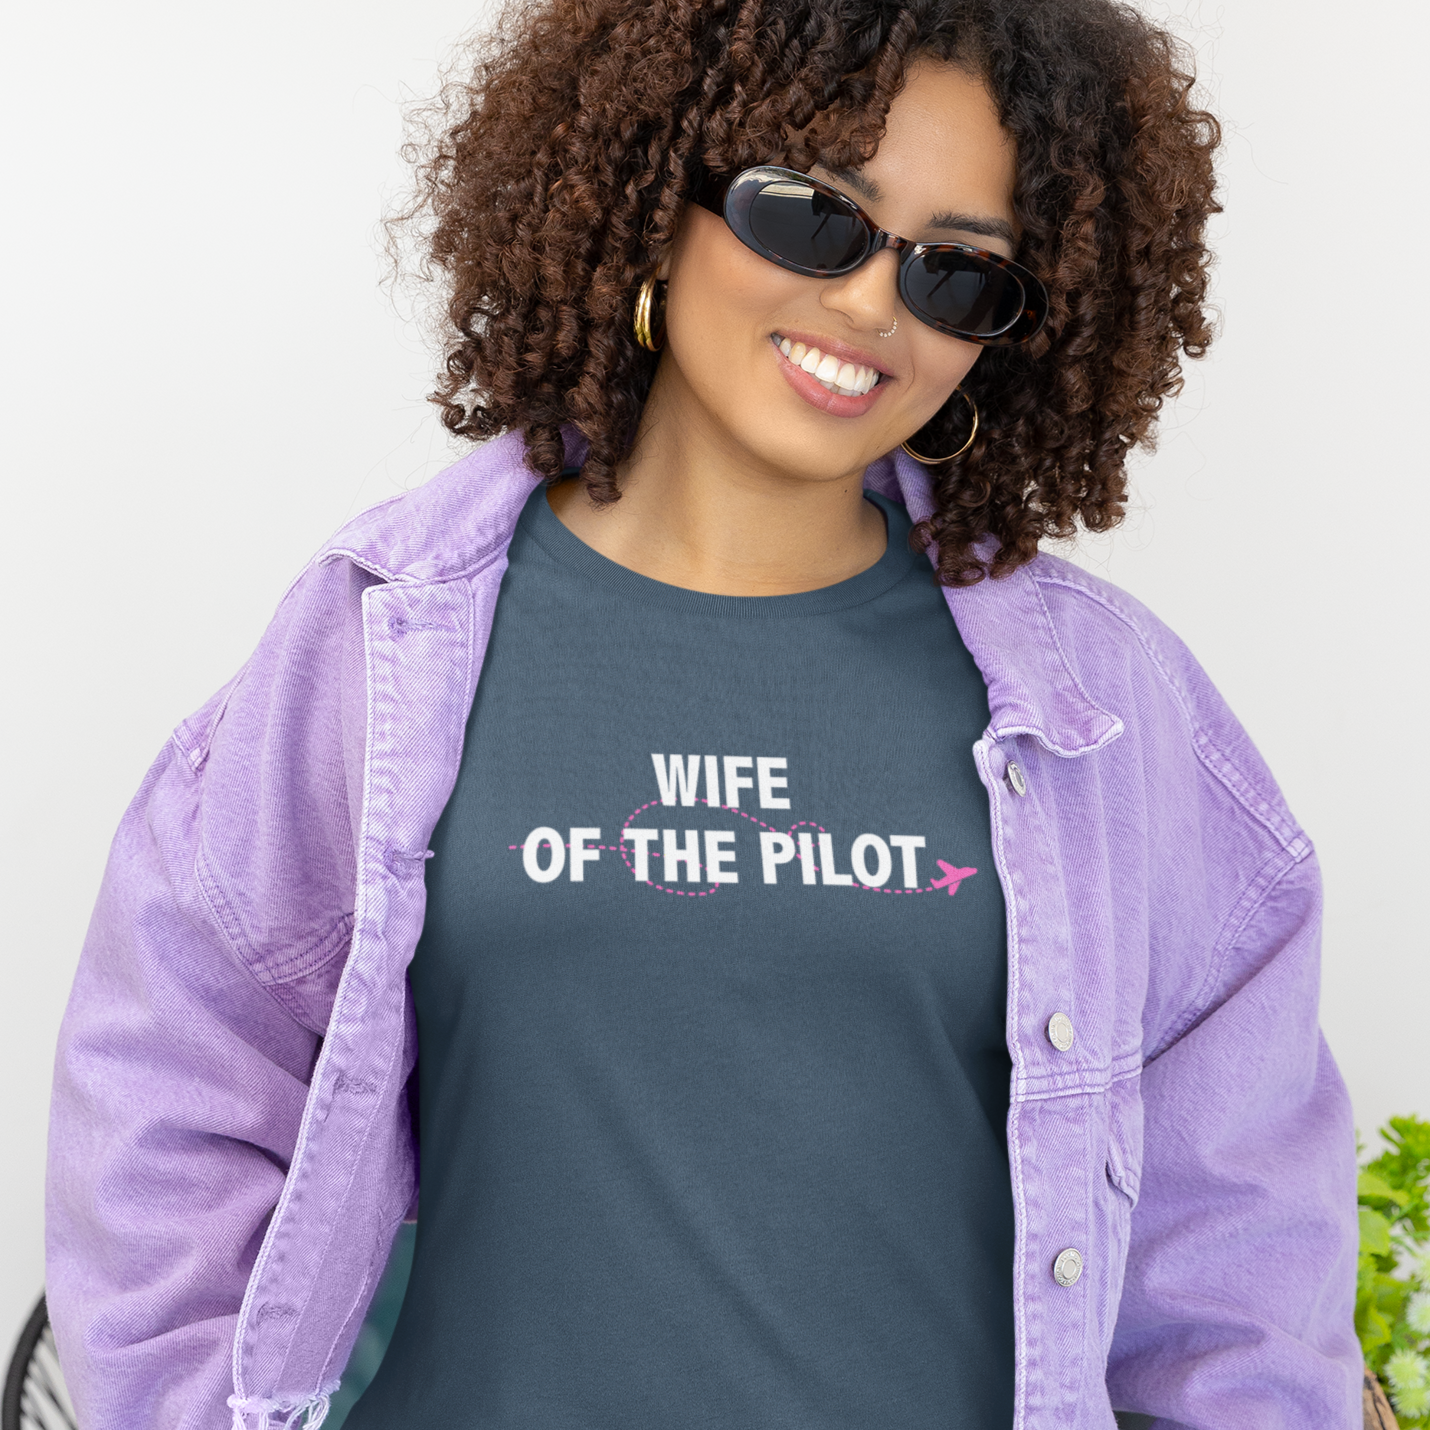 Wife of the/a Pilot T-shirt